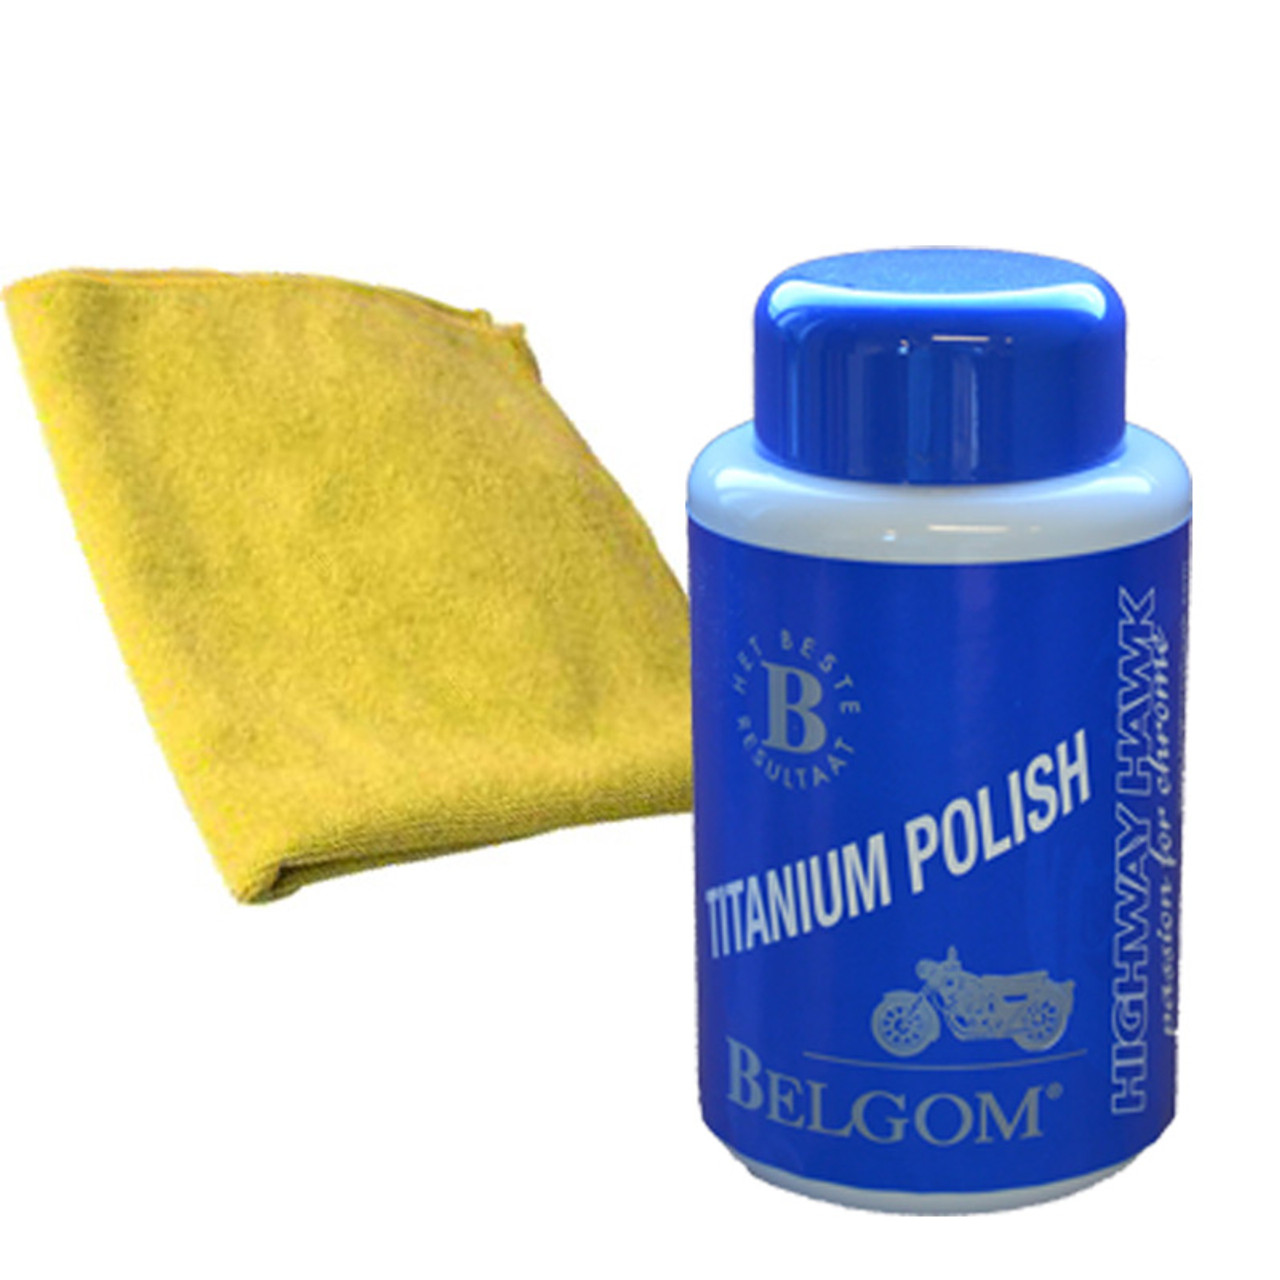 Belgom Titanium Polish